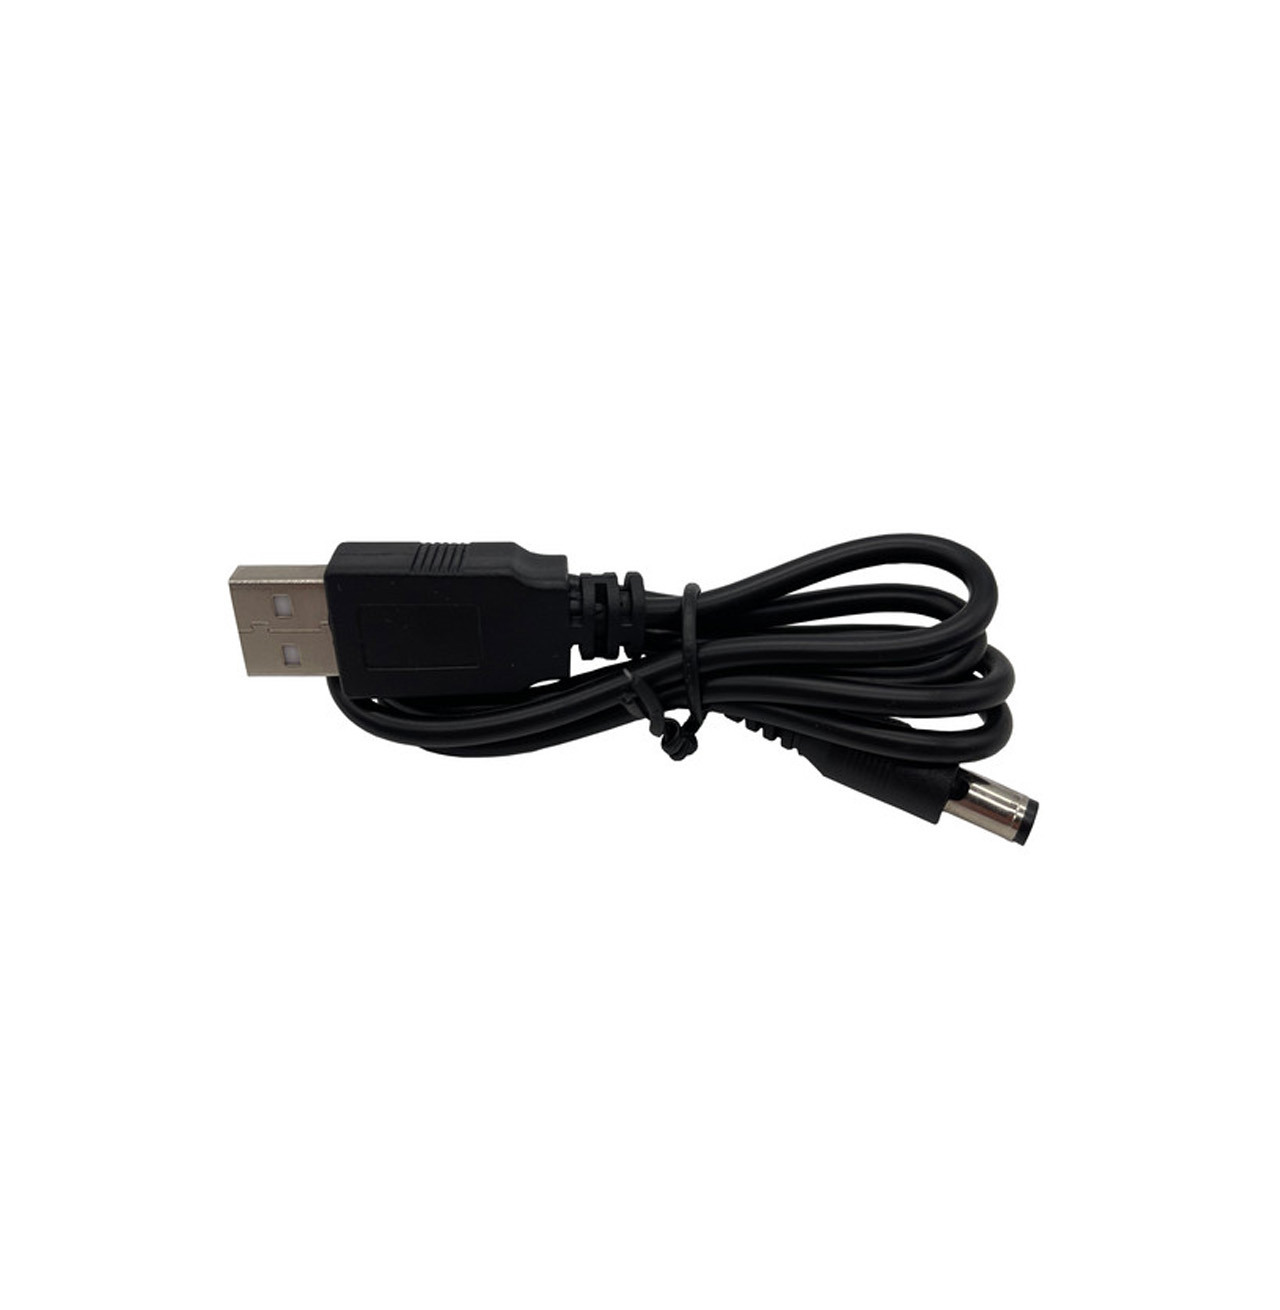 USB zu DC Ladekabel für CRP123EVO, CRP129EVO, CRP MOT III 